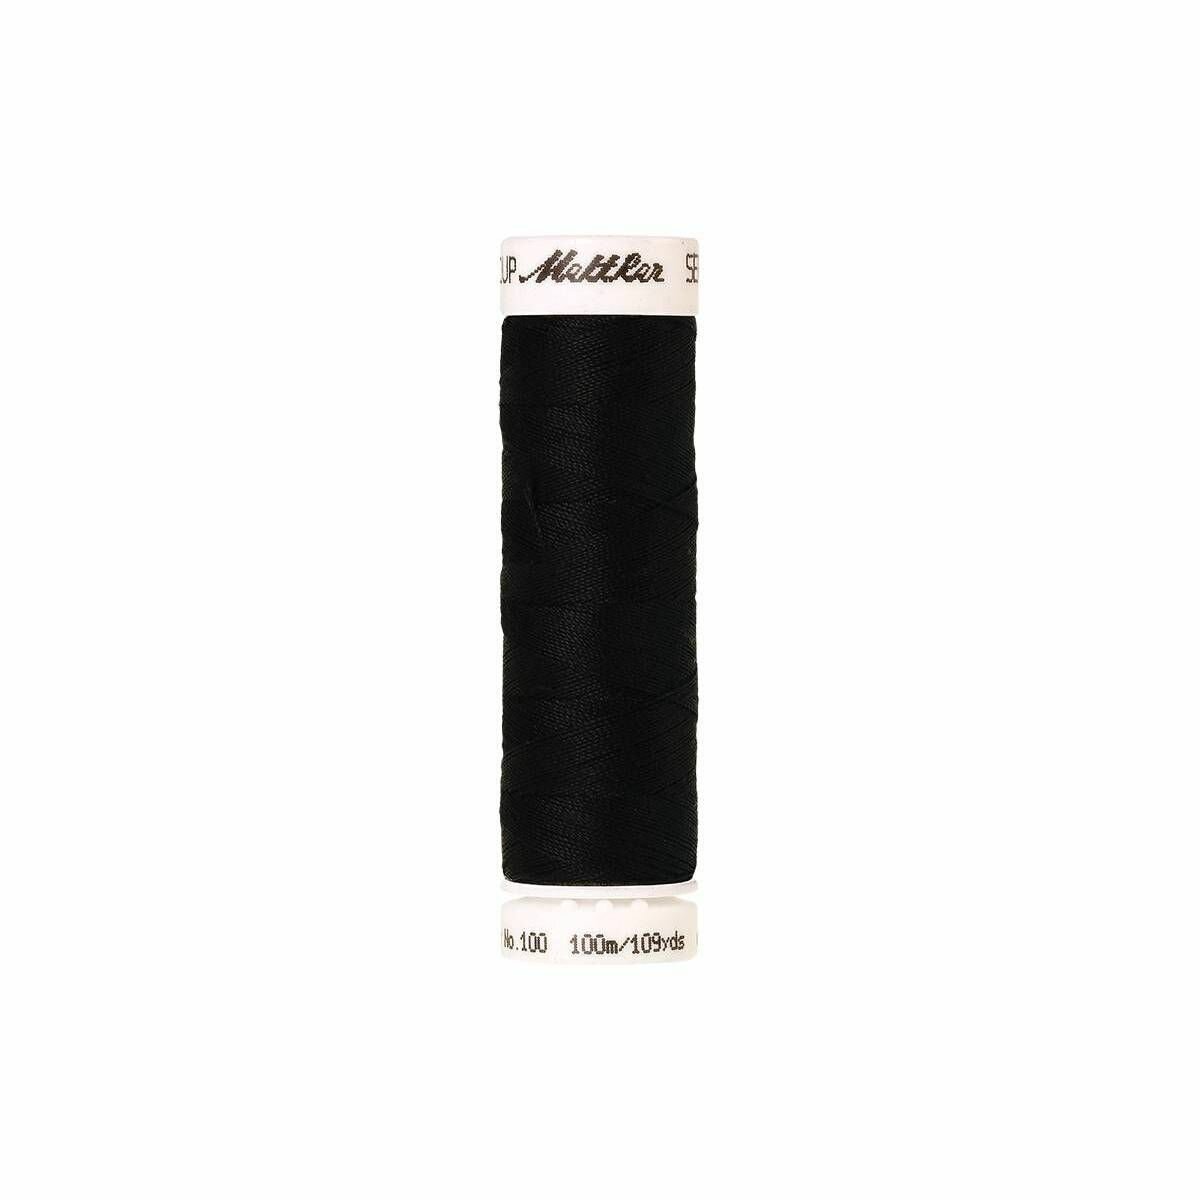 Нить универсальная Amann Group Mettler - Seralon 100, цвет 4000 Black, 100м, толщина №100, 5шт